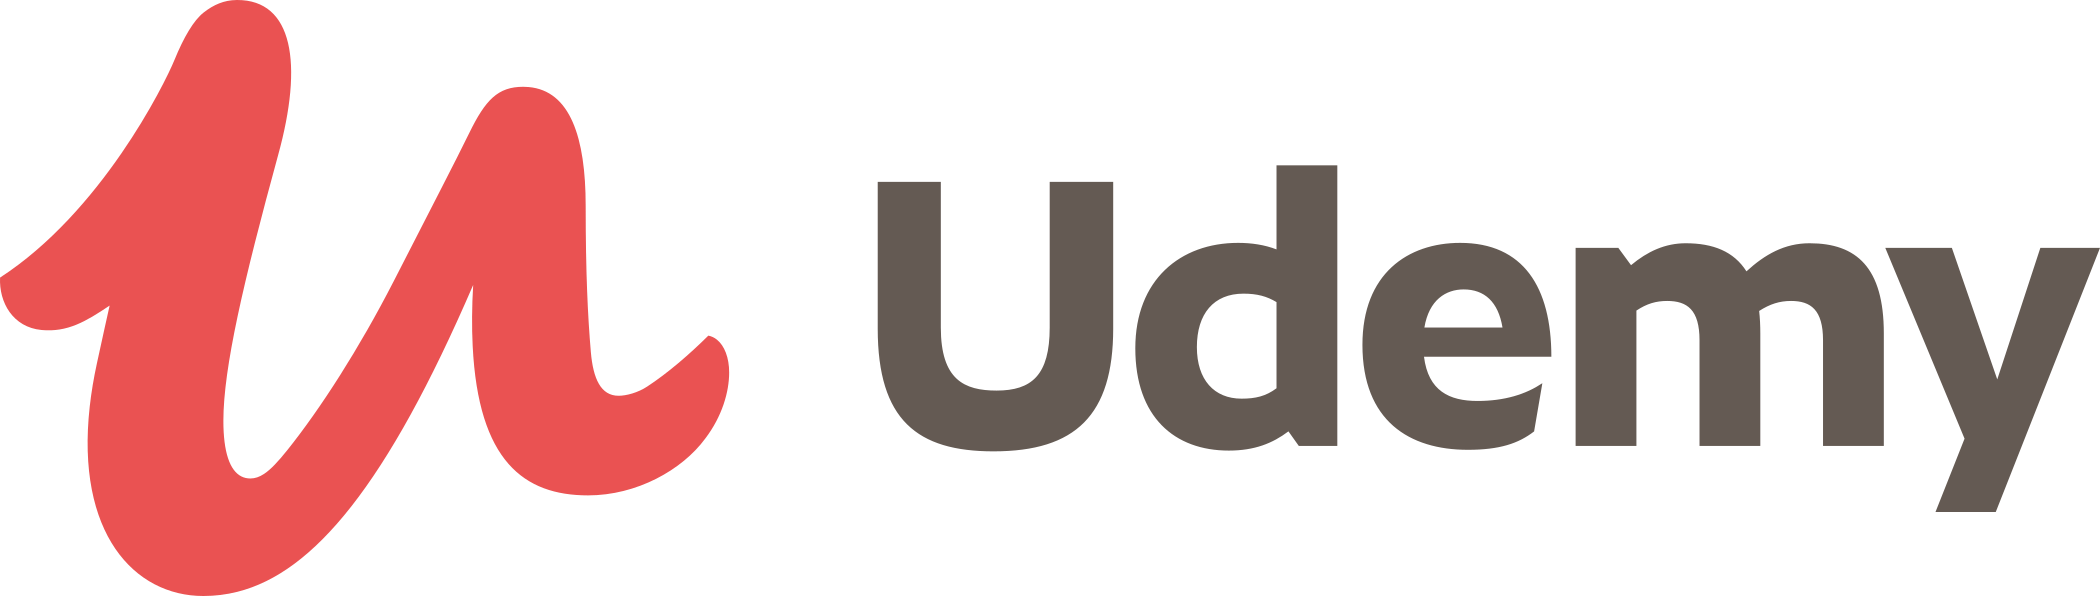 udemy logo 1 - Udemy Logo